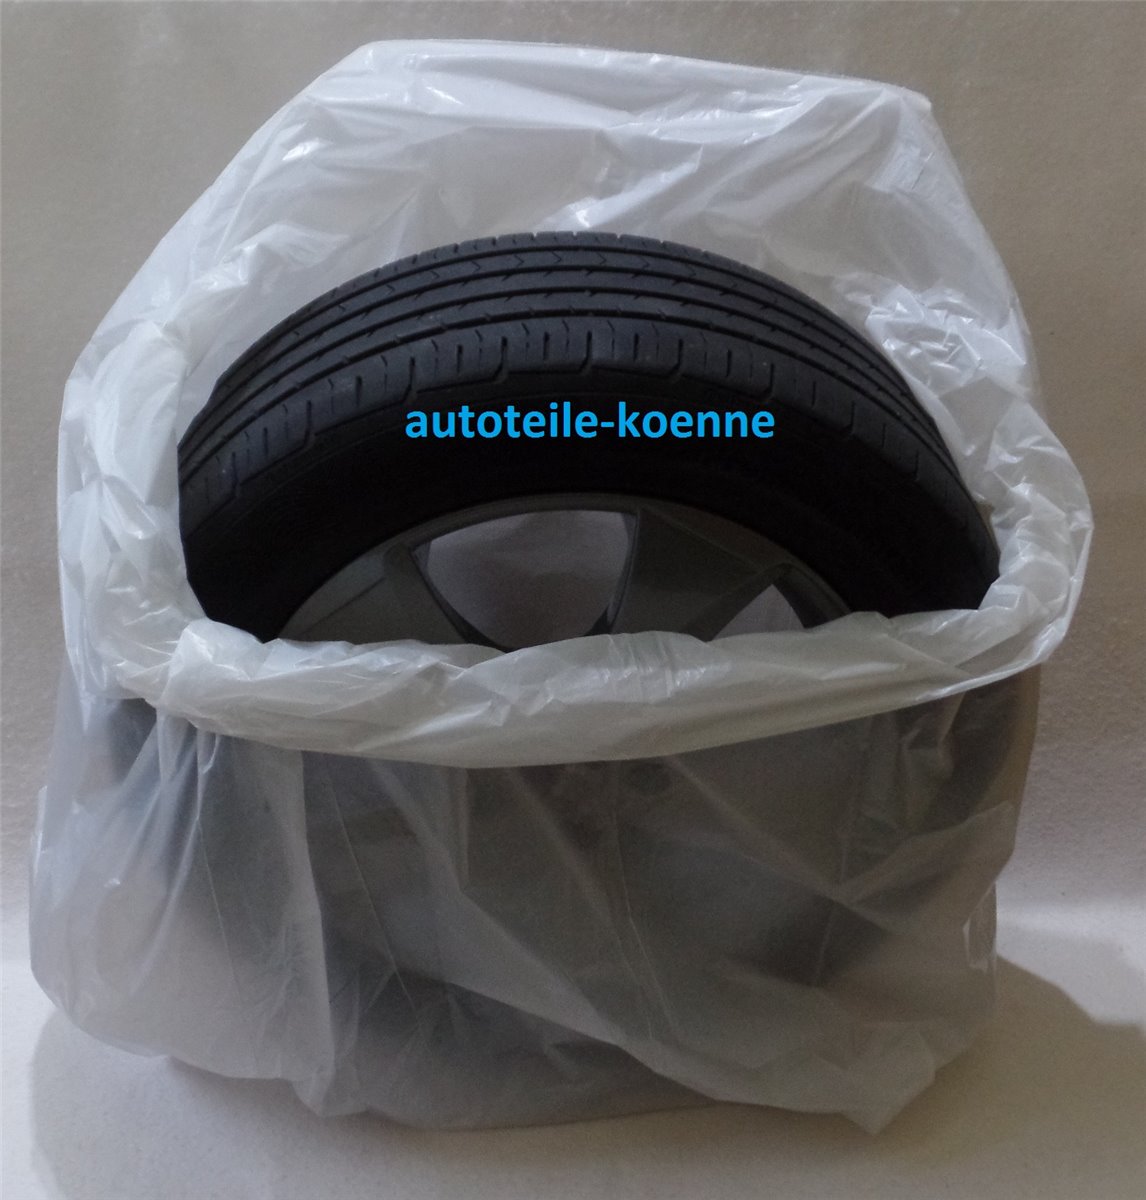 autoteile-koenne - 400 Reifensäcke XL Rolle Reifentüten Reifentaschen  Reifensäcke Reifentaschen